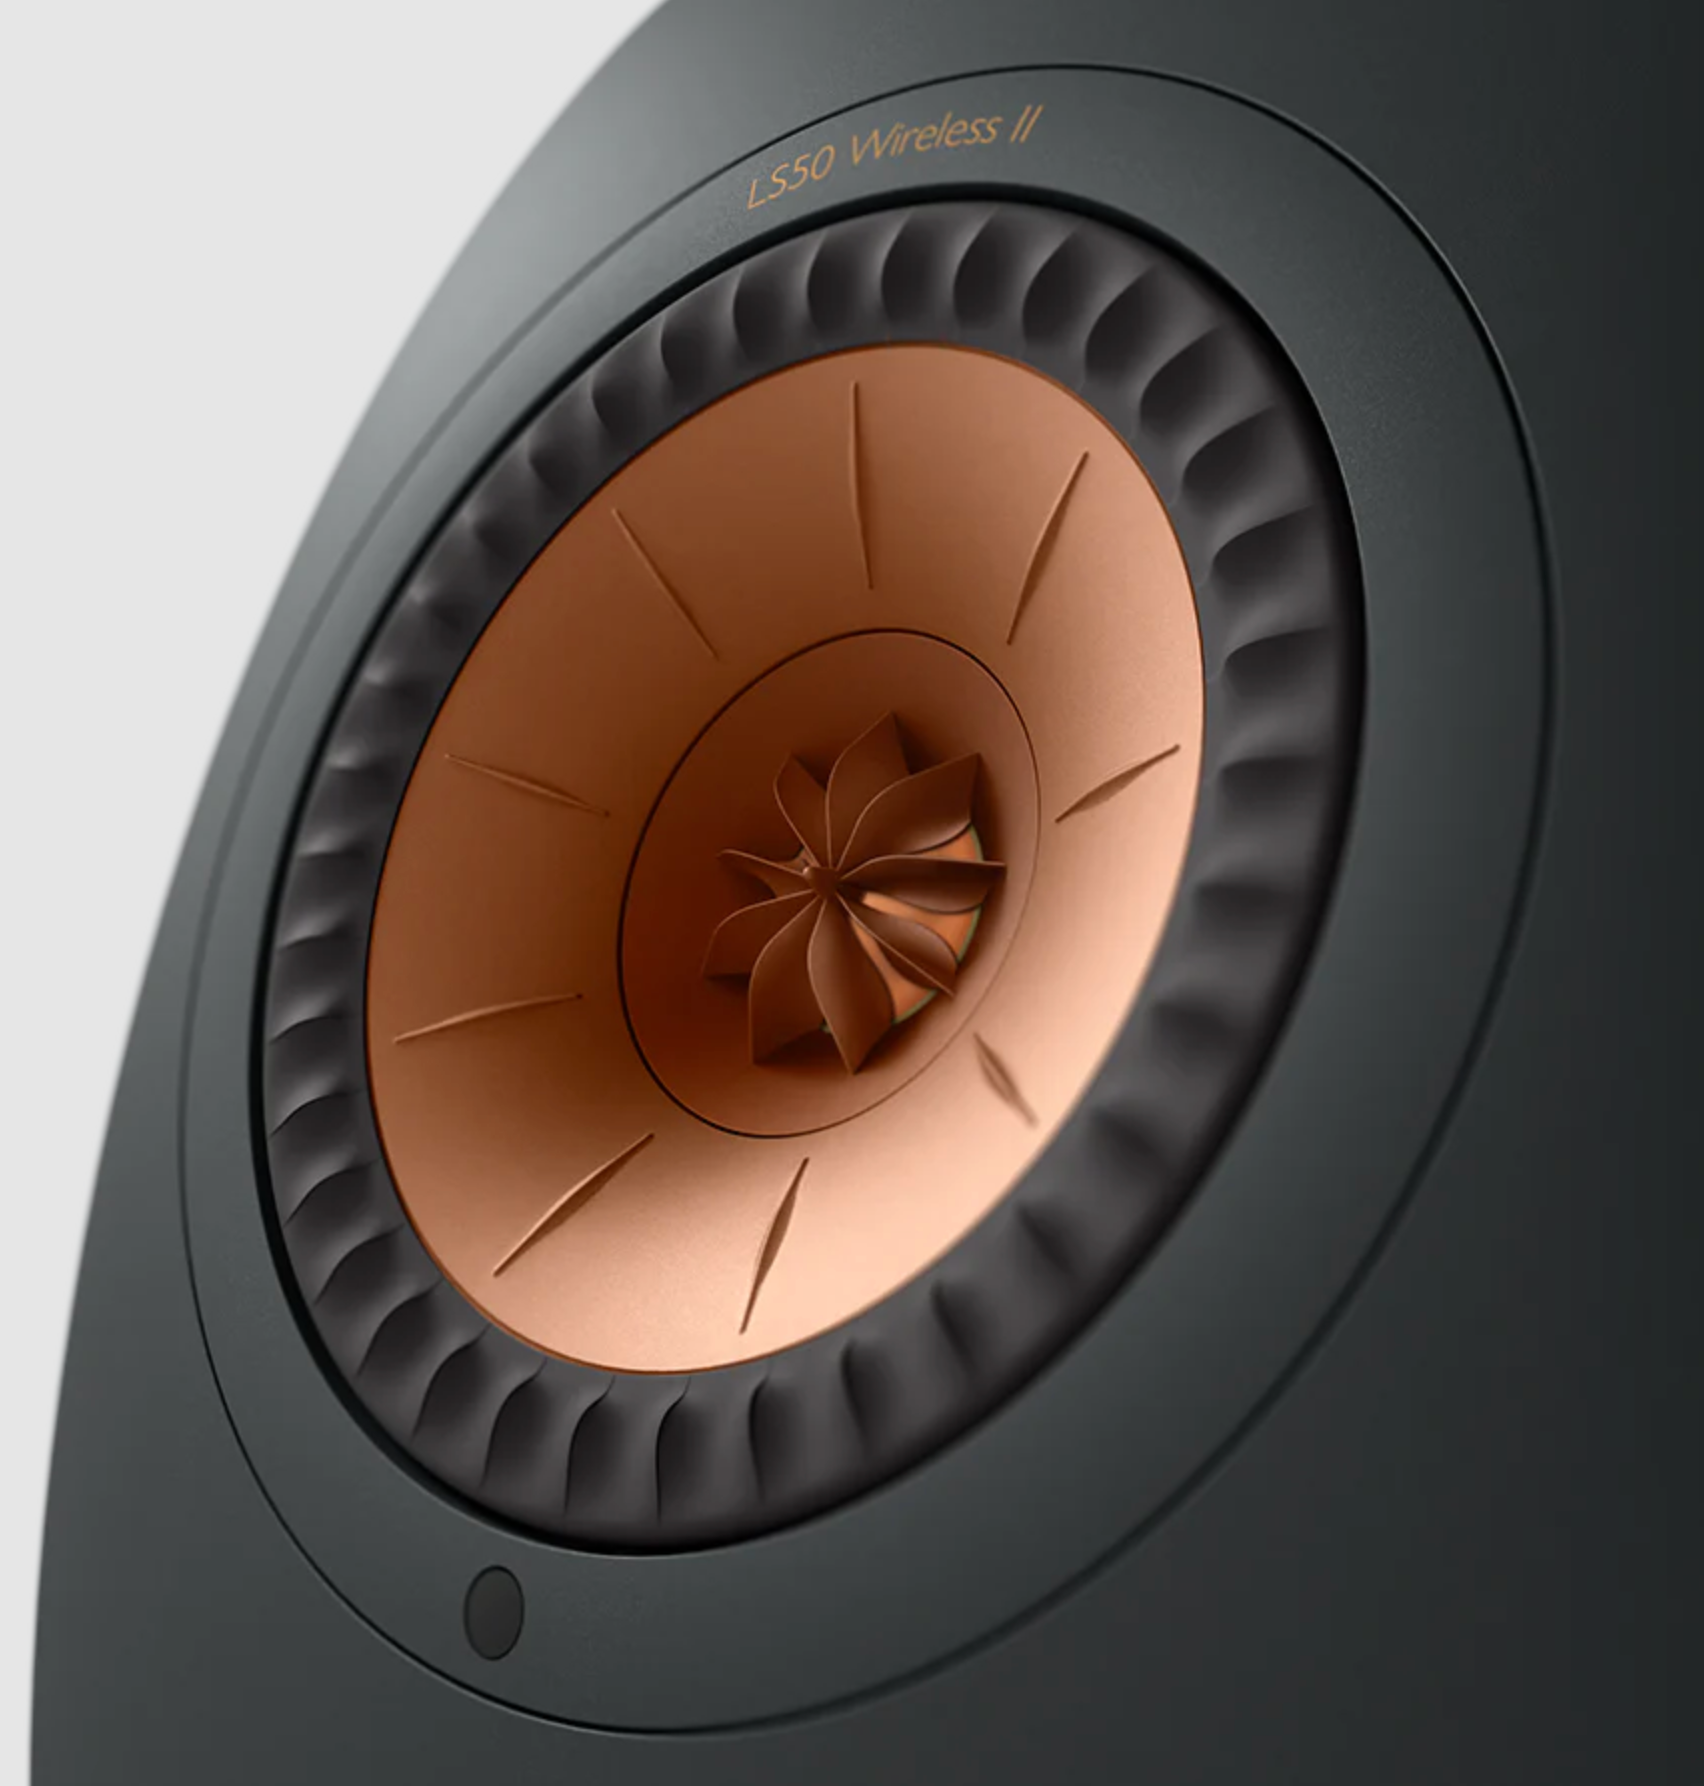 KEF LS50 Wireless II Bookshelf Speakers in Carbon Black - close up image